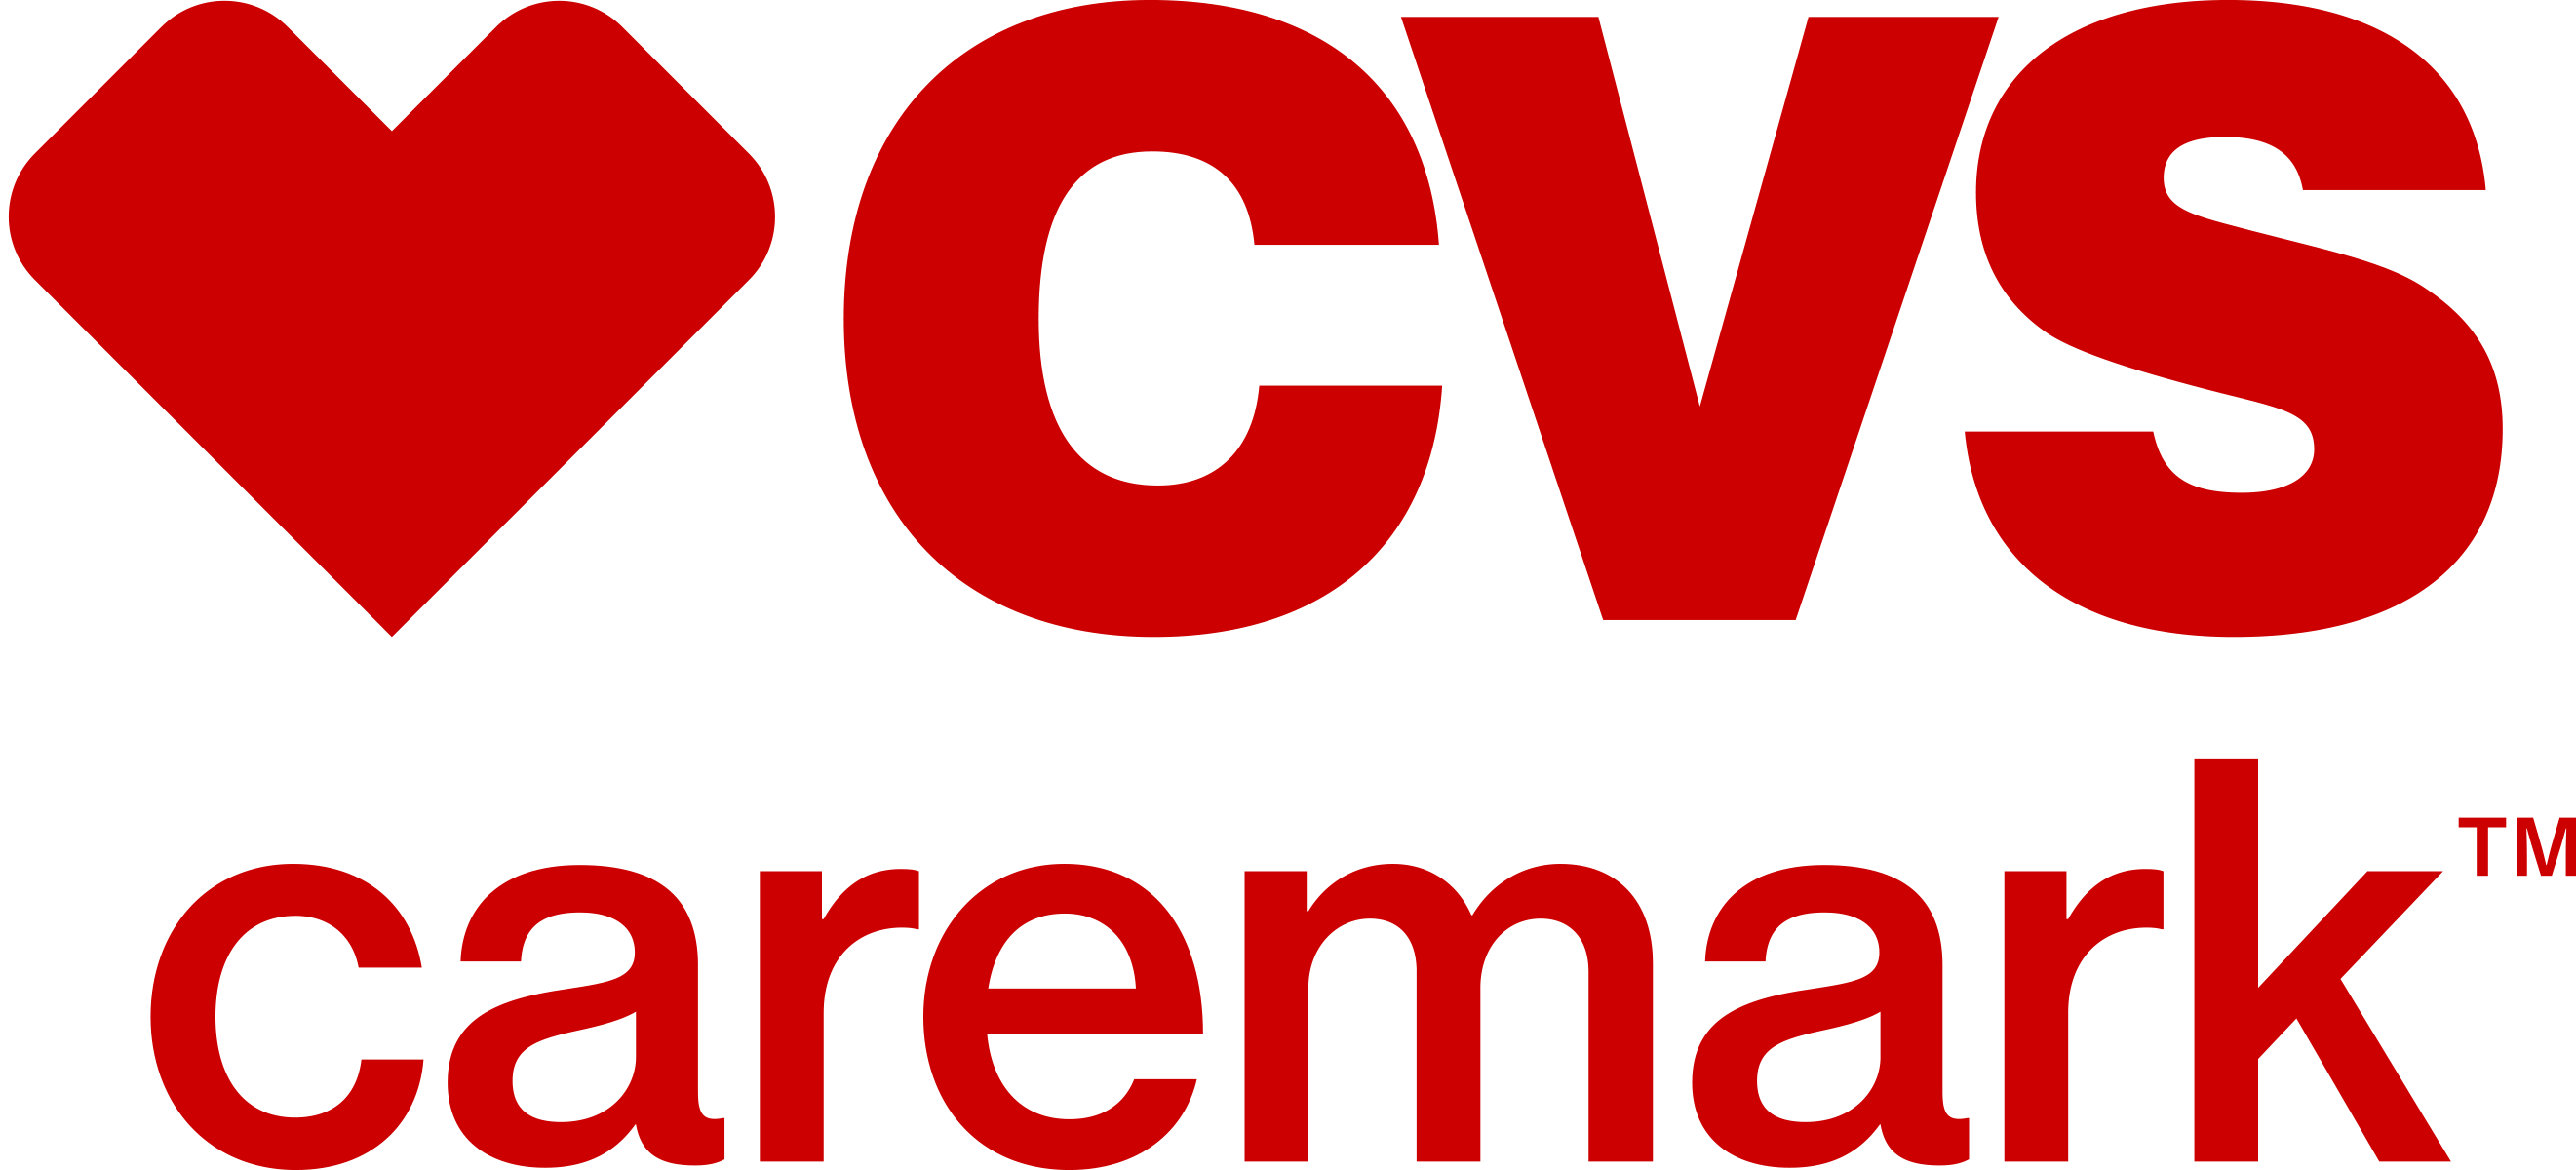 cvs-caremark-logo-stacked